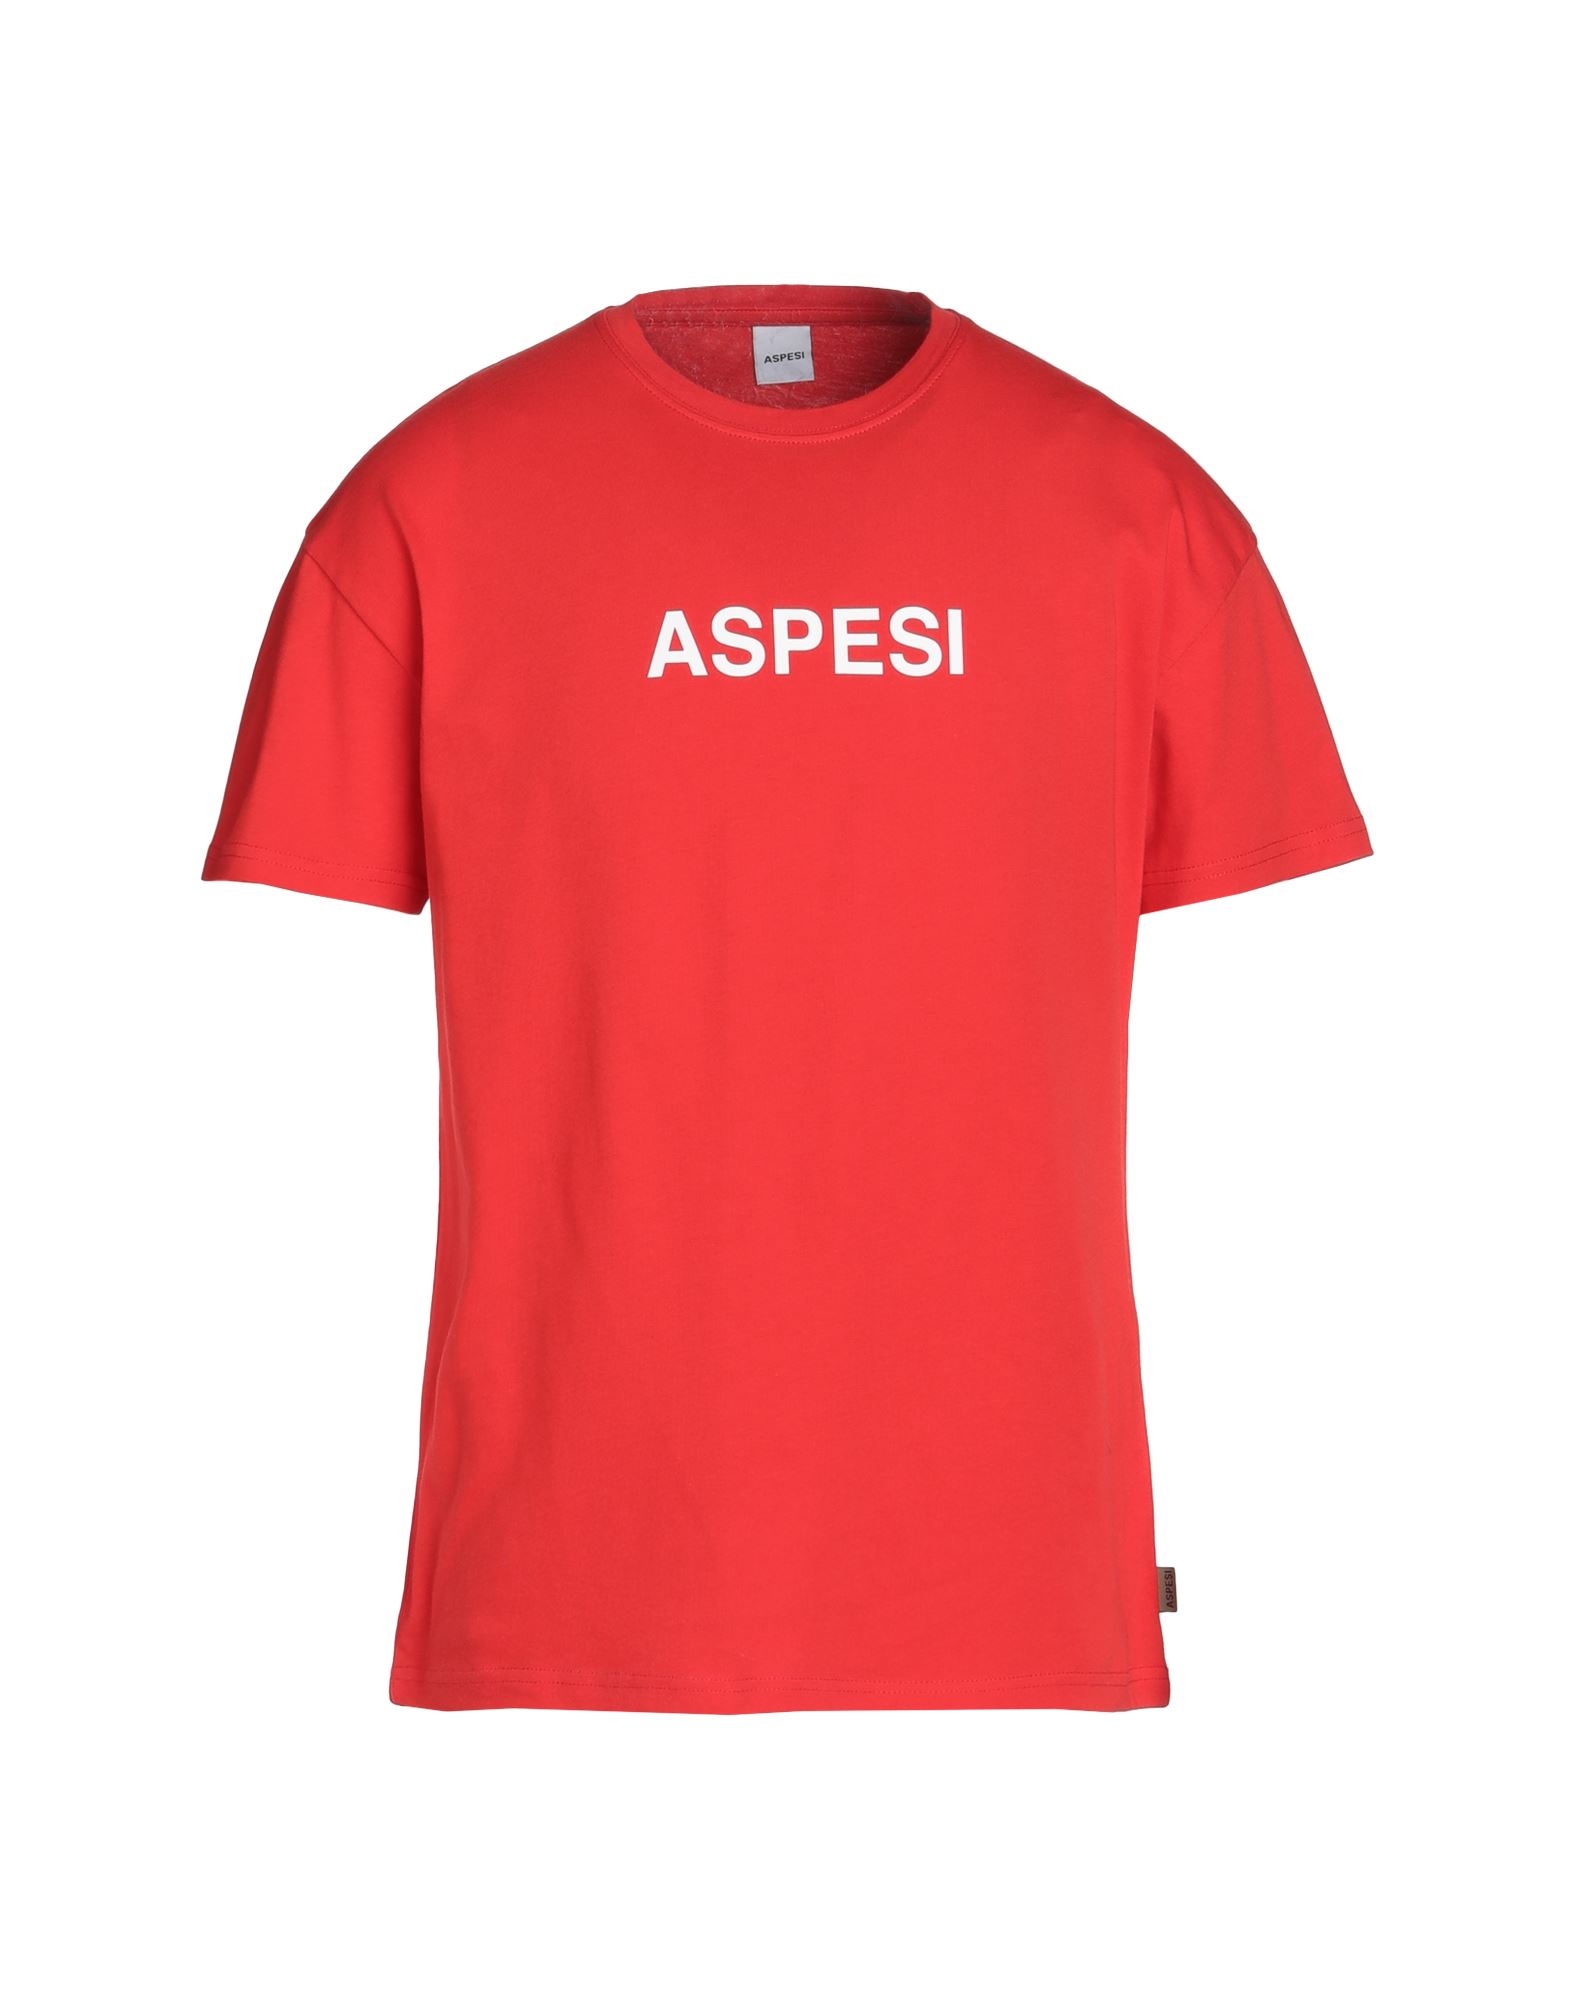 ASPESI T-shirts Herren Rot von ASPESI